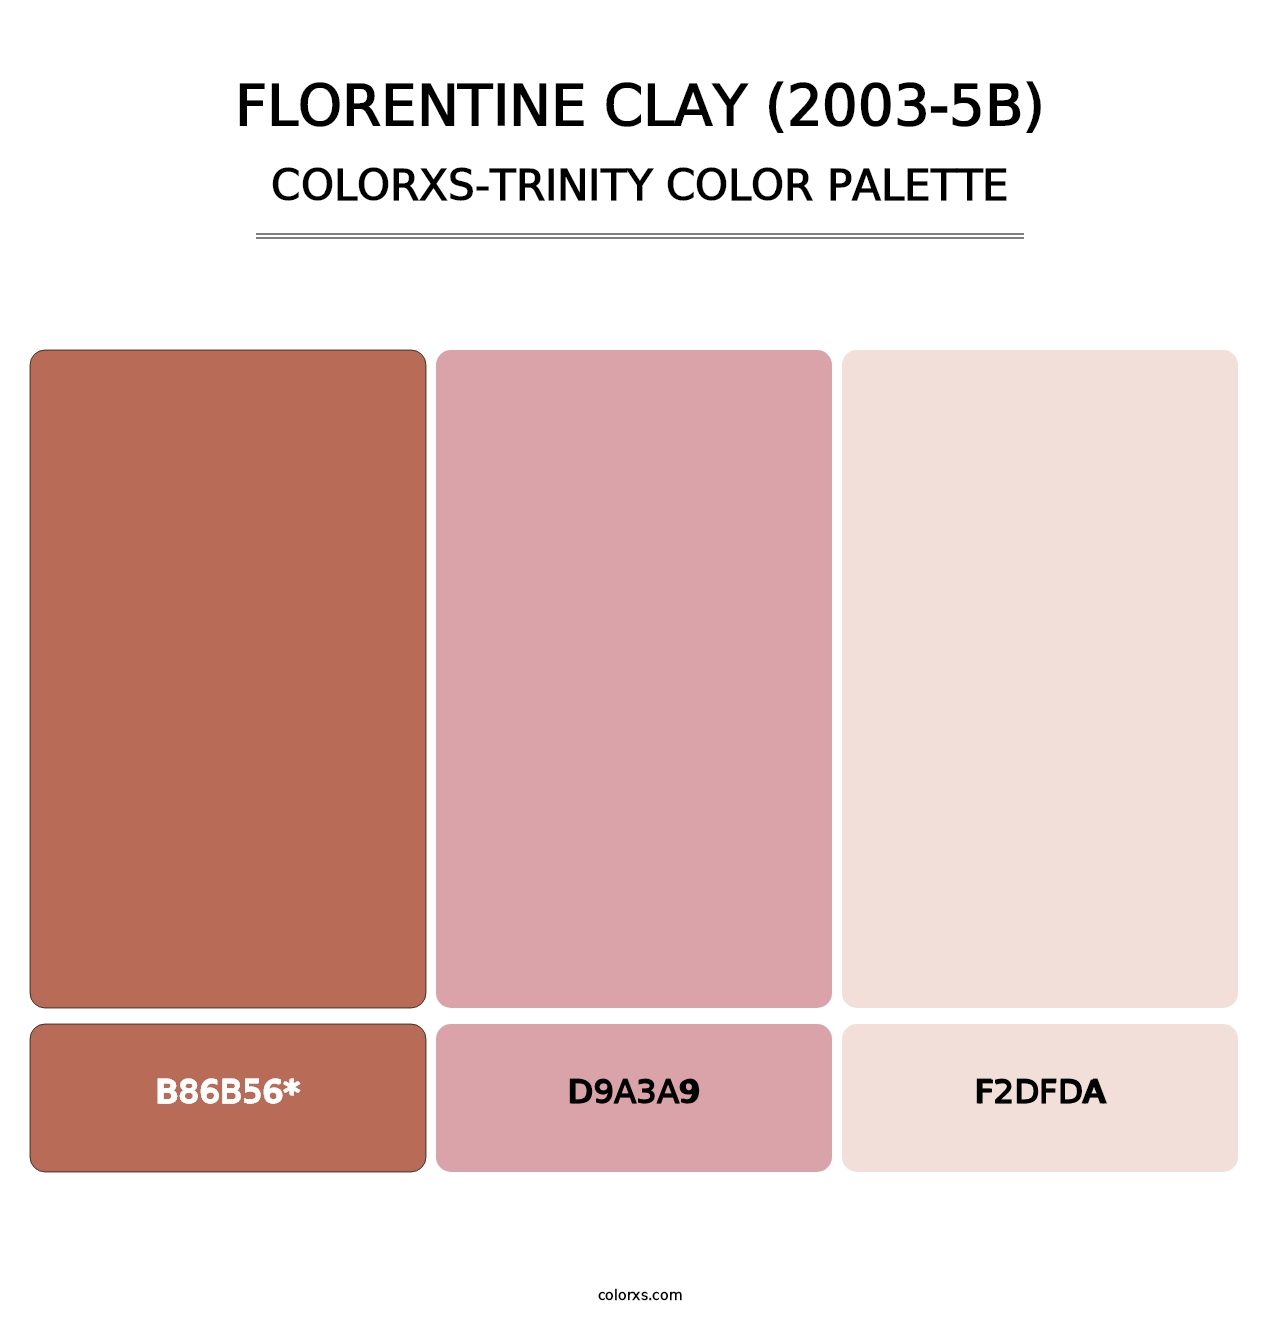 Florentine Clay (2003-5B) - Colorxs Trinity Palette